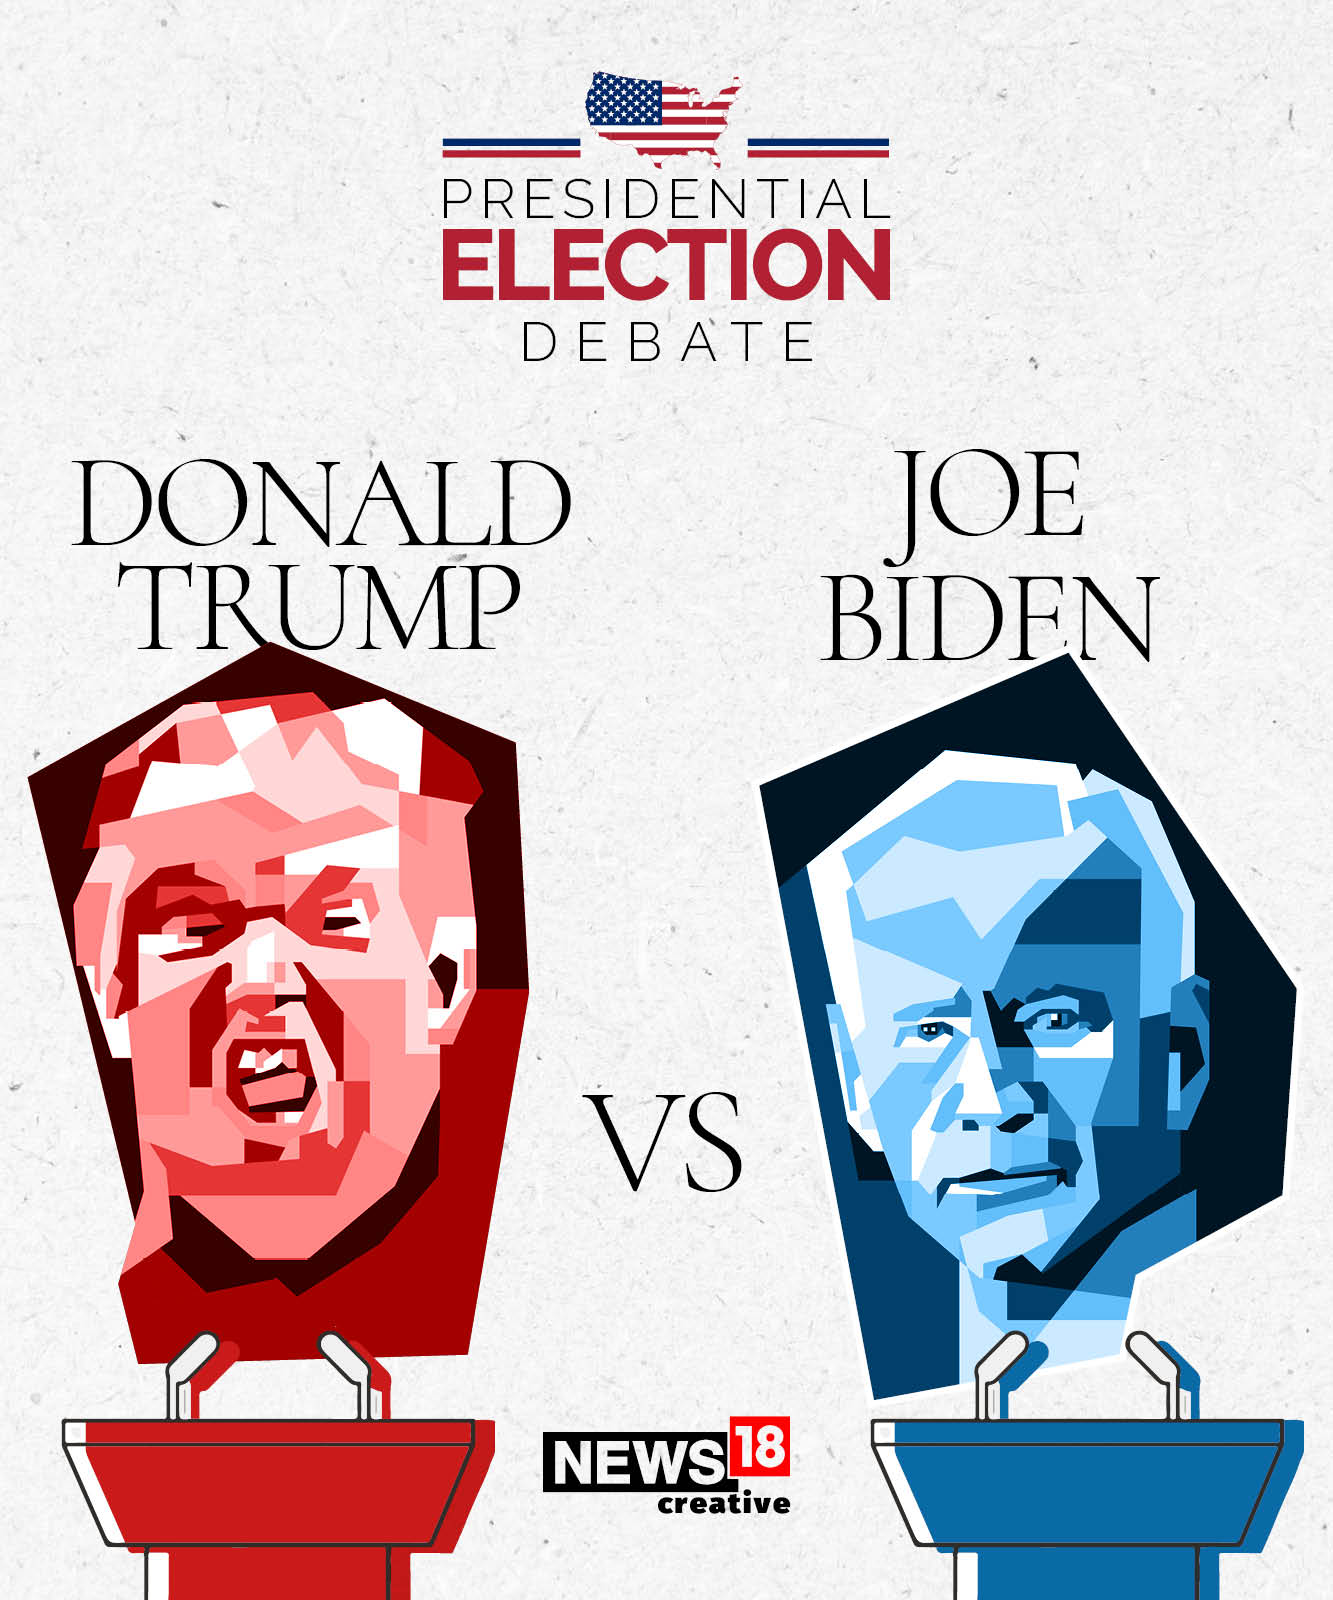 US Presidential Debate: Key takeaways from the Trump-Biden face-off